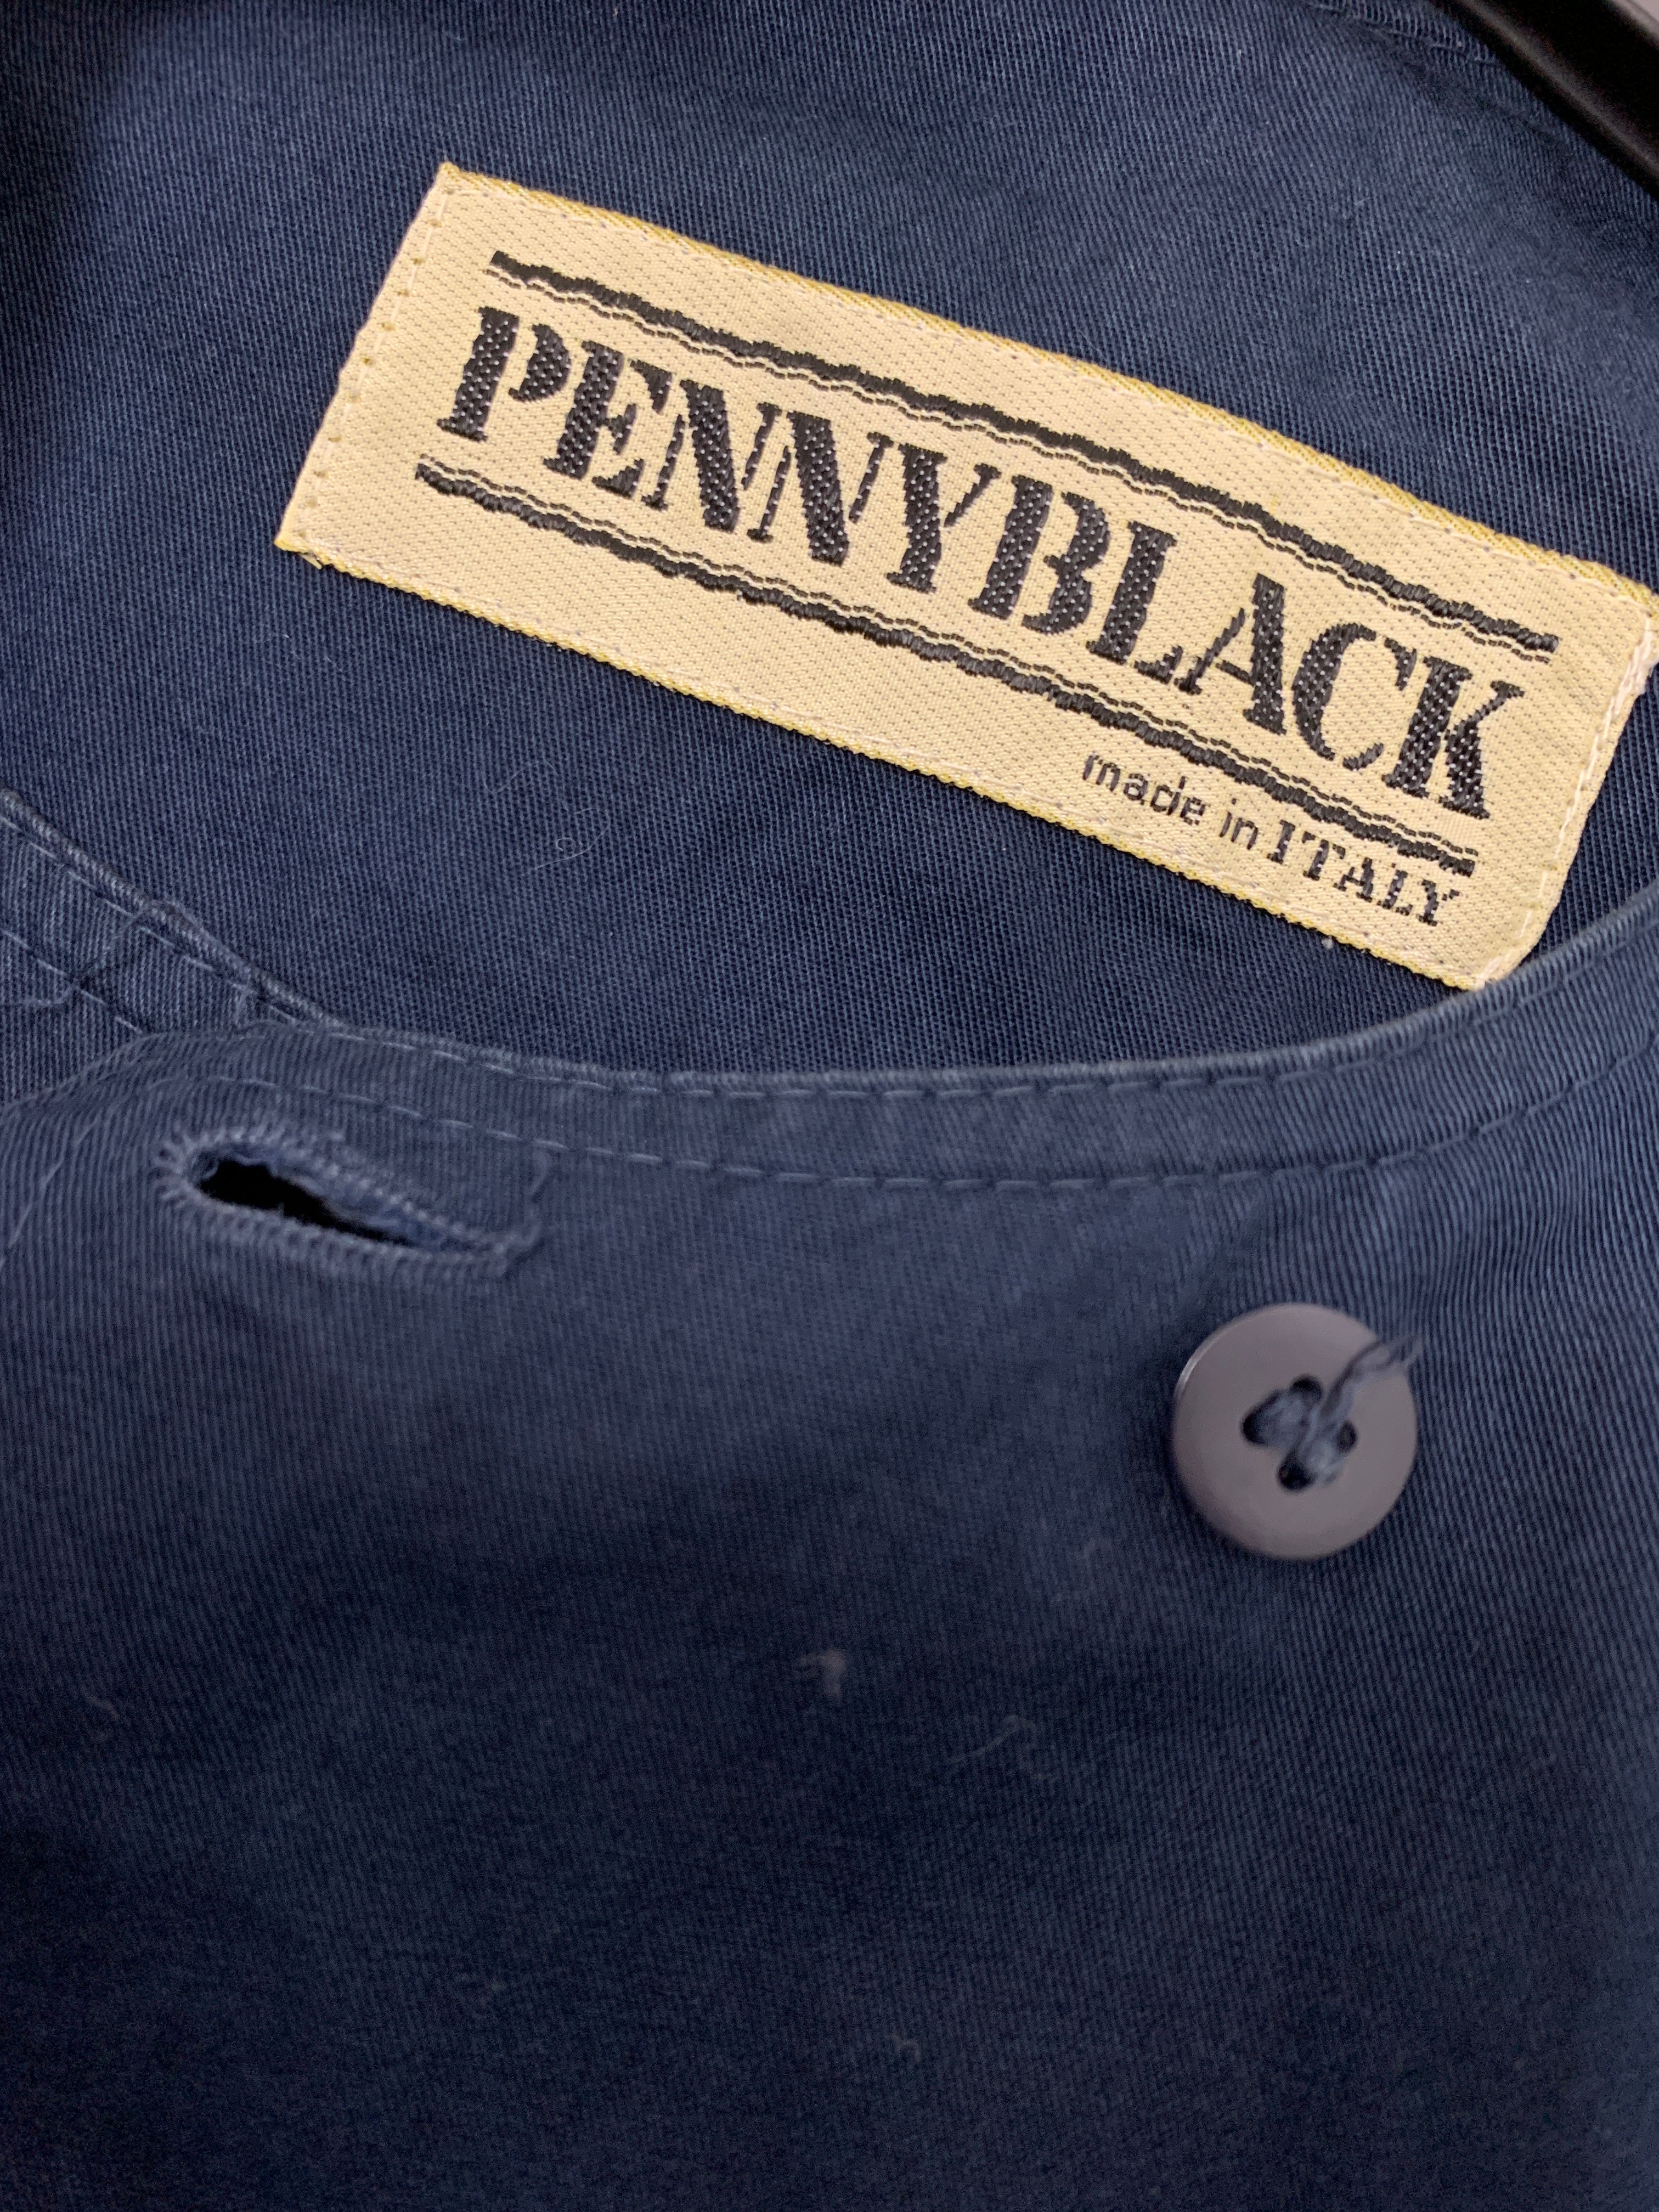 Pennyblack vintage cotton jacket